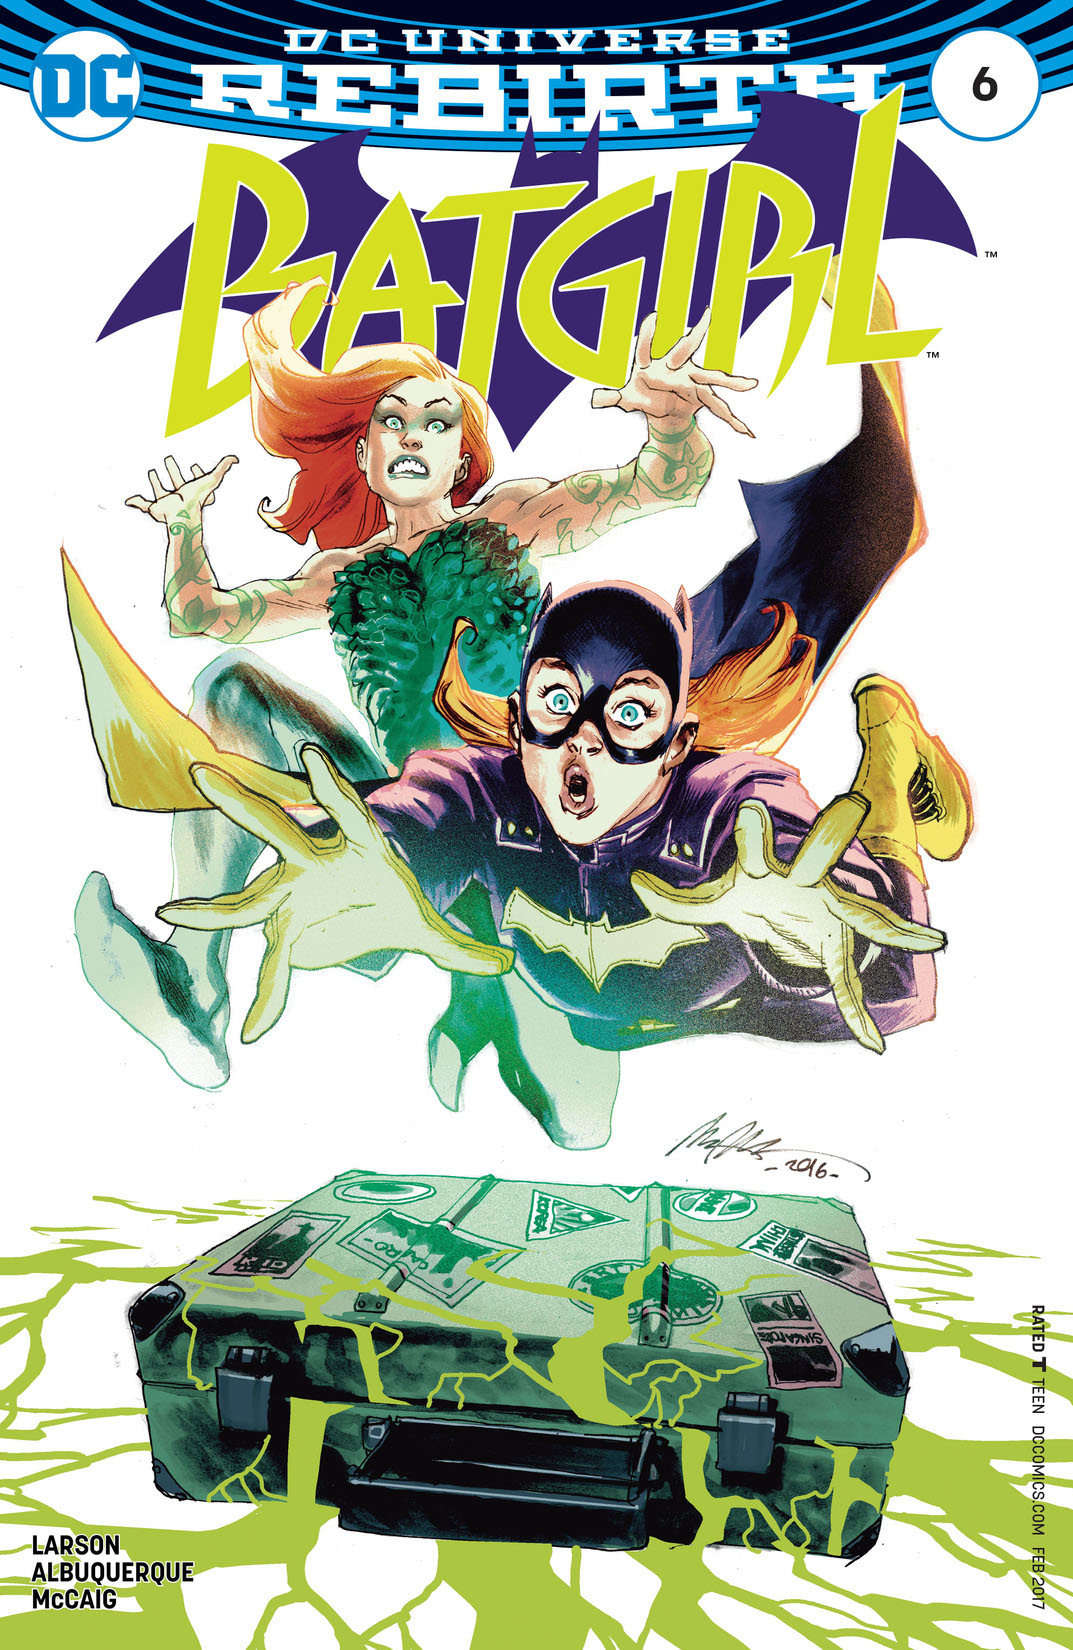 Batgirl (2016-) #6 preview images